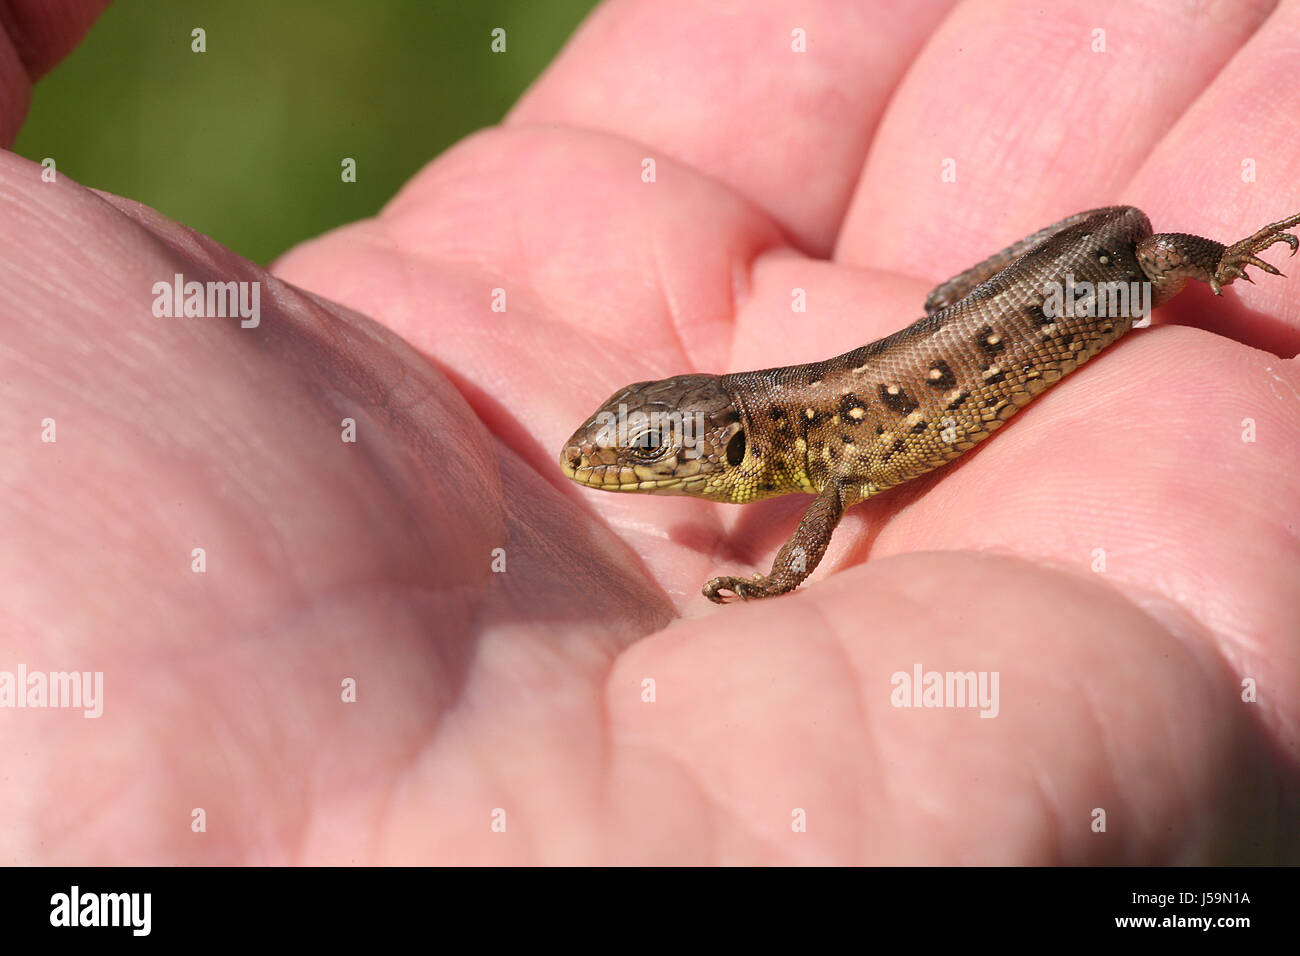 small lizard in hand Stock Photo - Alamy